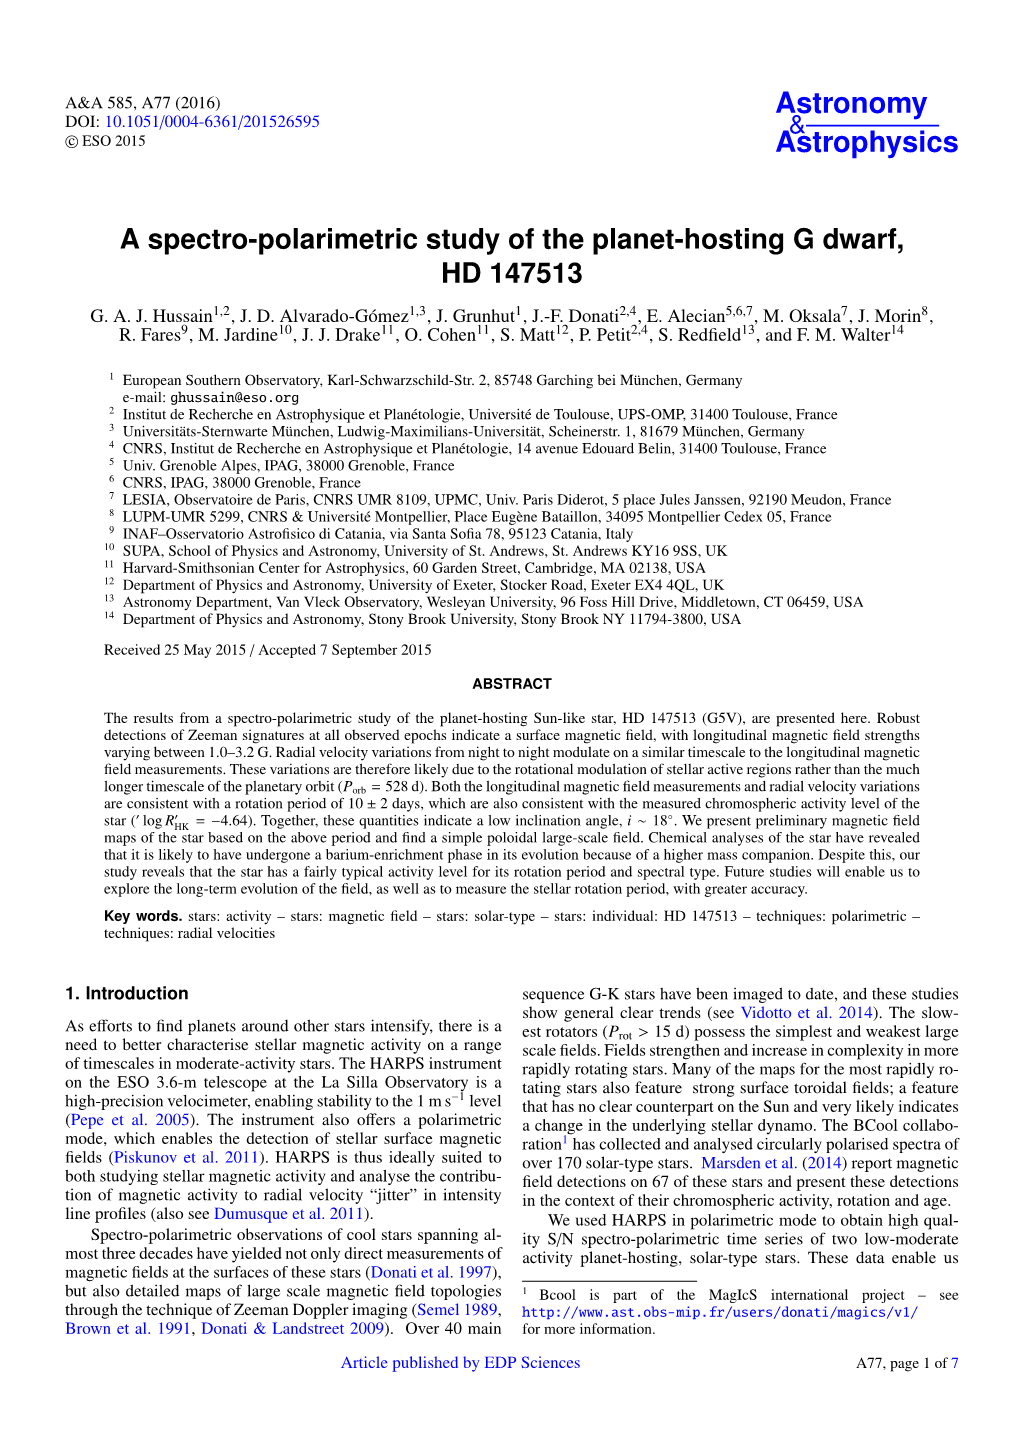 A Spectro-Polarimetric Study of the Planet-Hosting G Dwarf, HD 147513 G